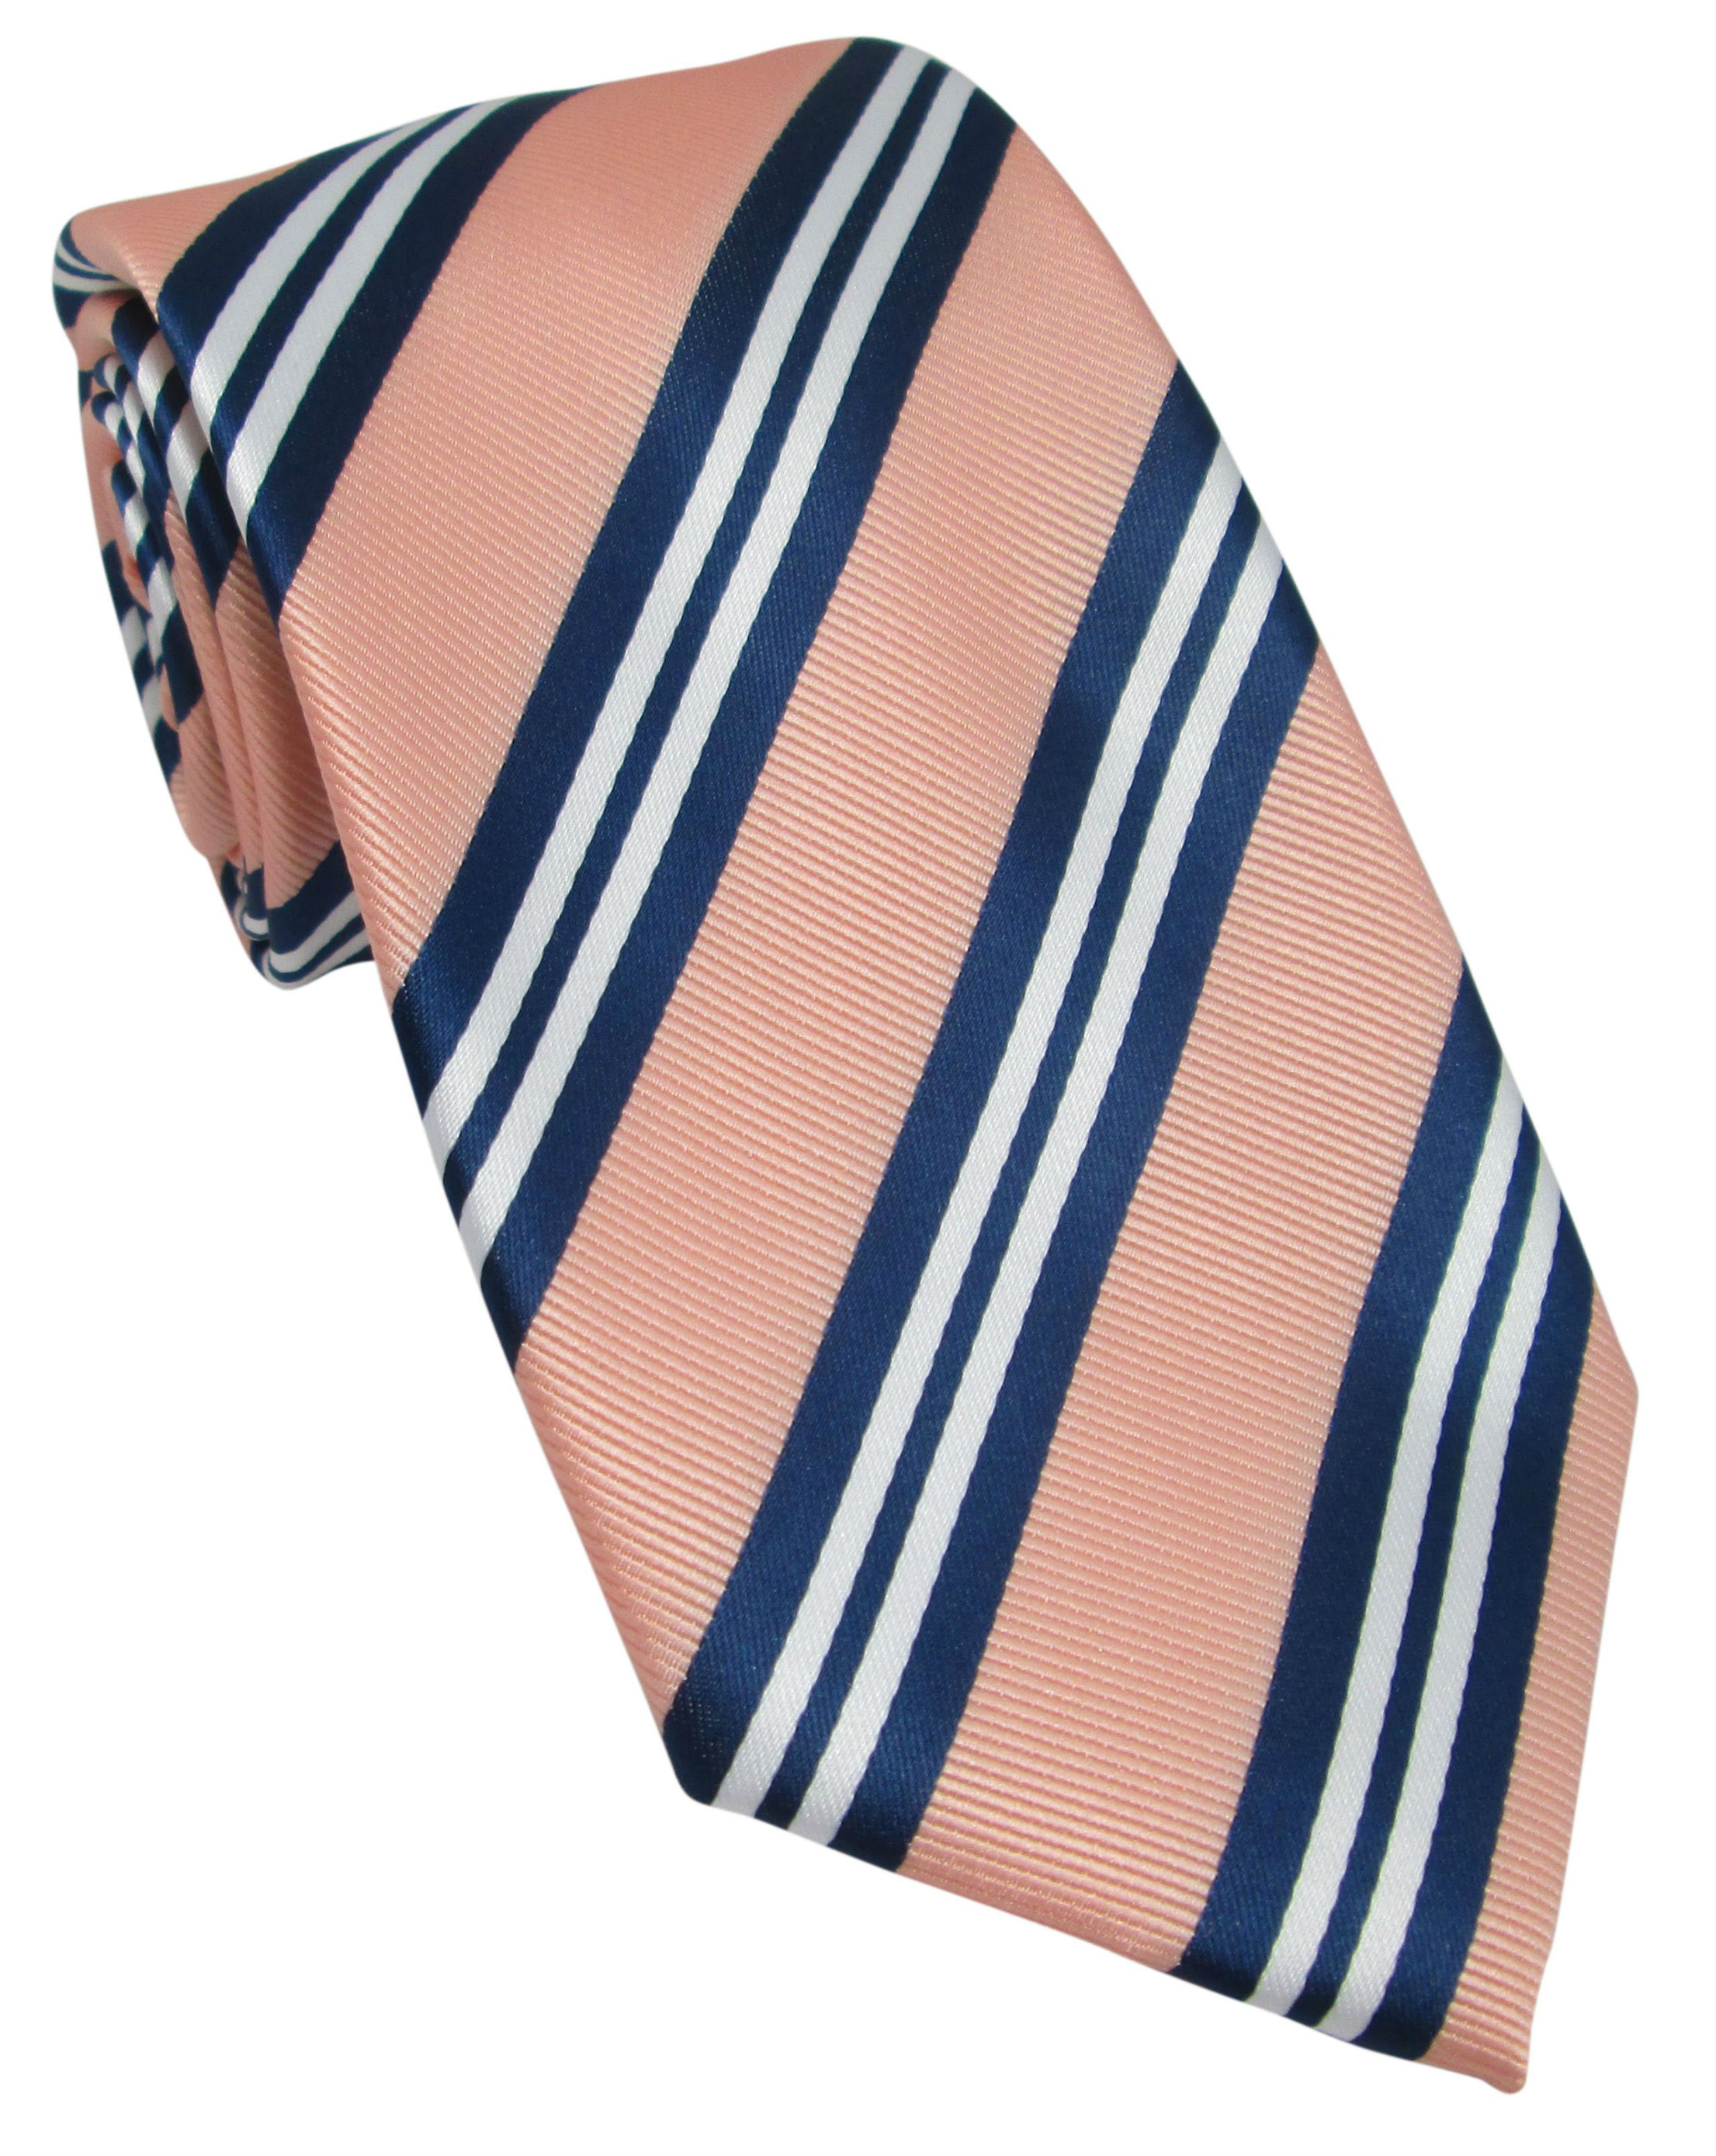 Peach Tie with Navy & White Stripes